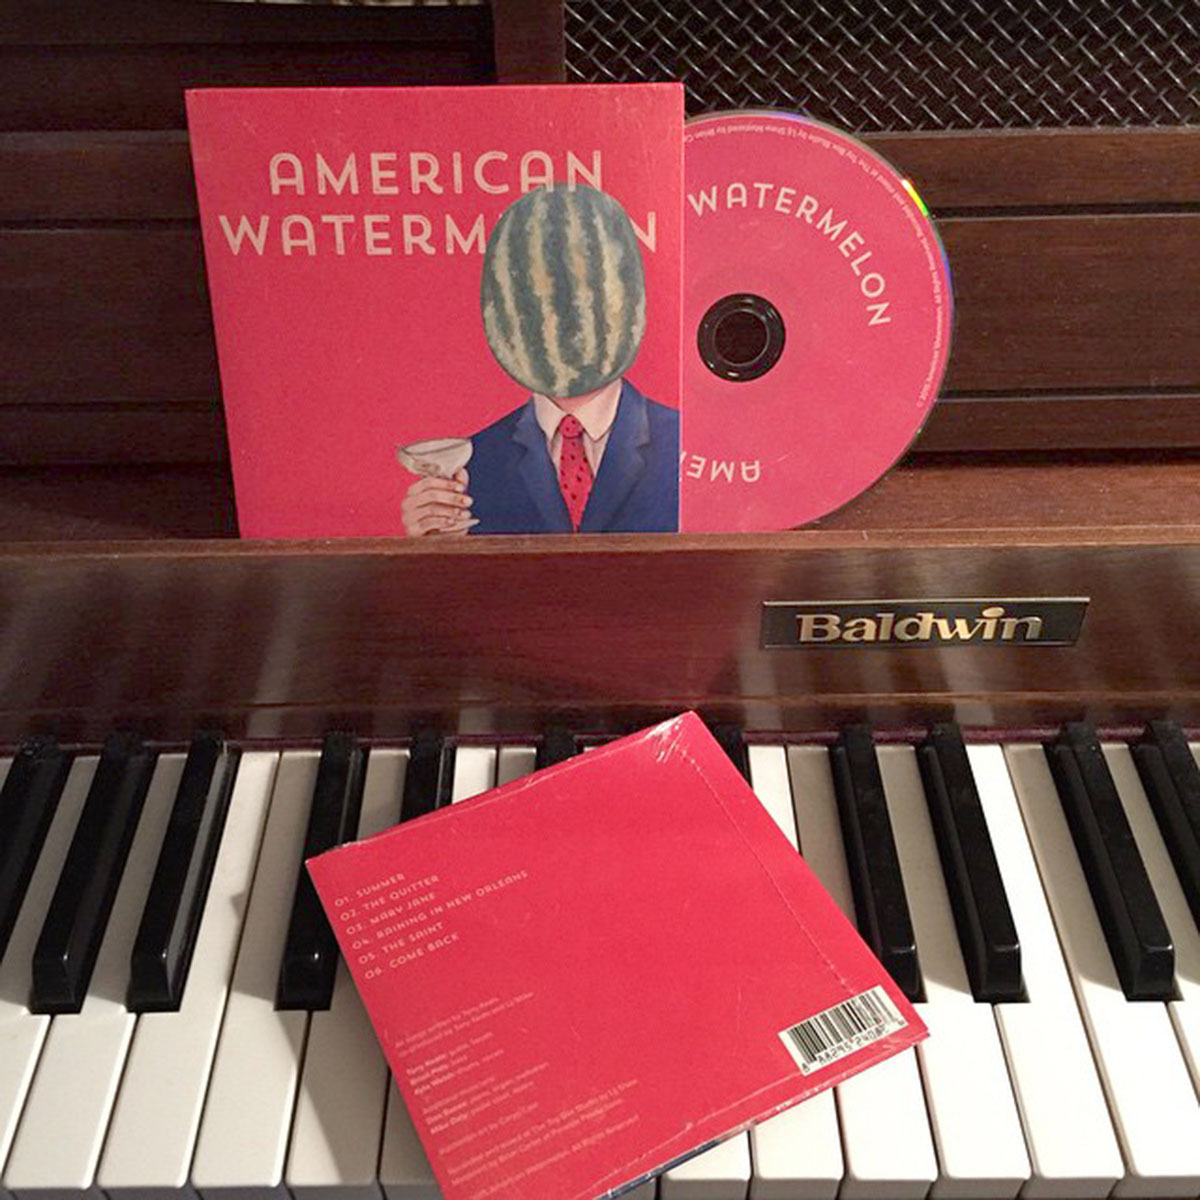 CD cover CD Cover Design watermelon americanwatermelon CD cover illustration cd illustration quirky cd covers funny cd covers weird cd covers watermelon art watermelon illustration watermelon man